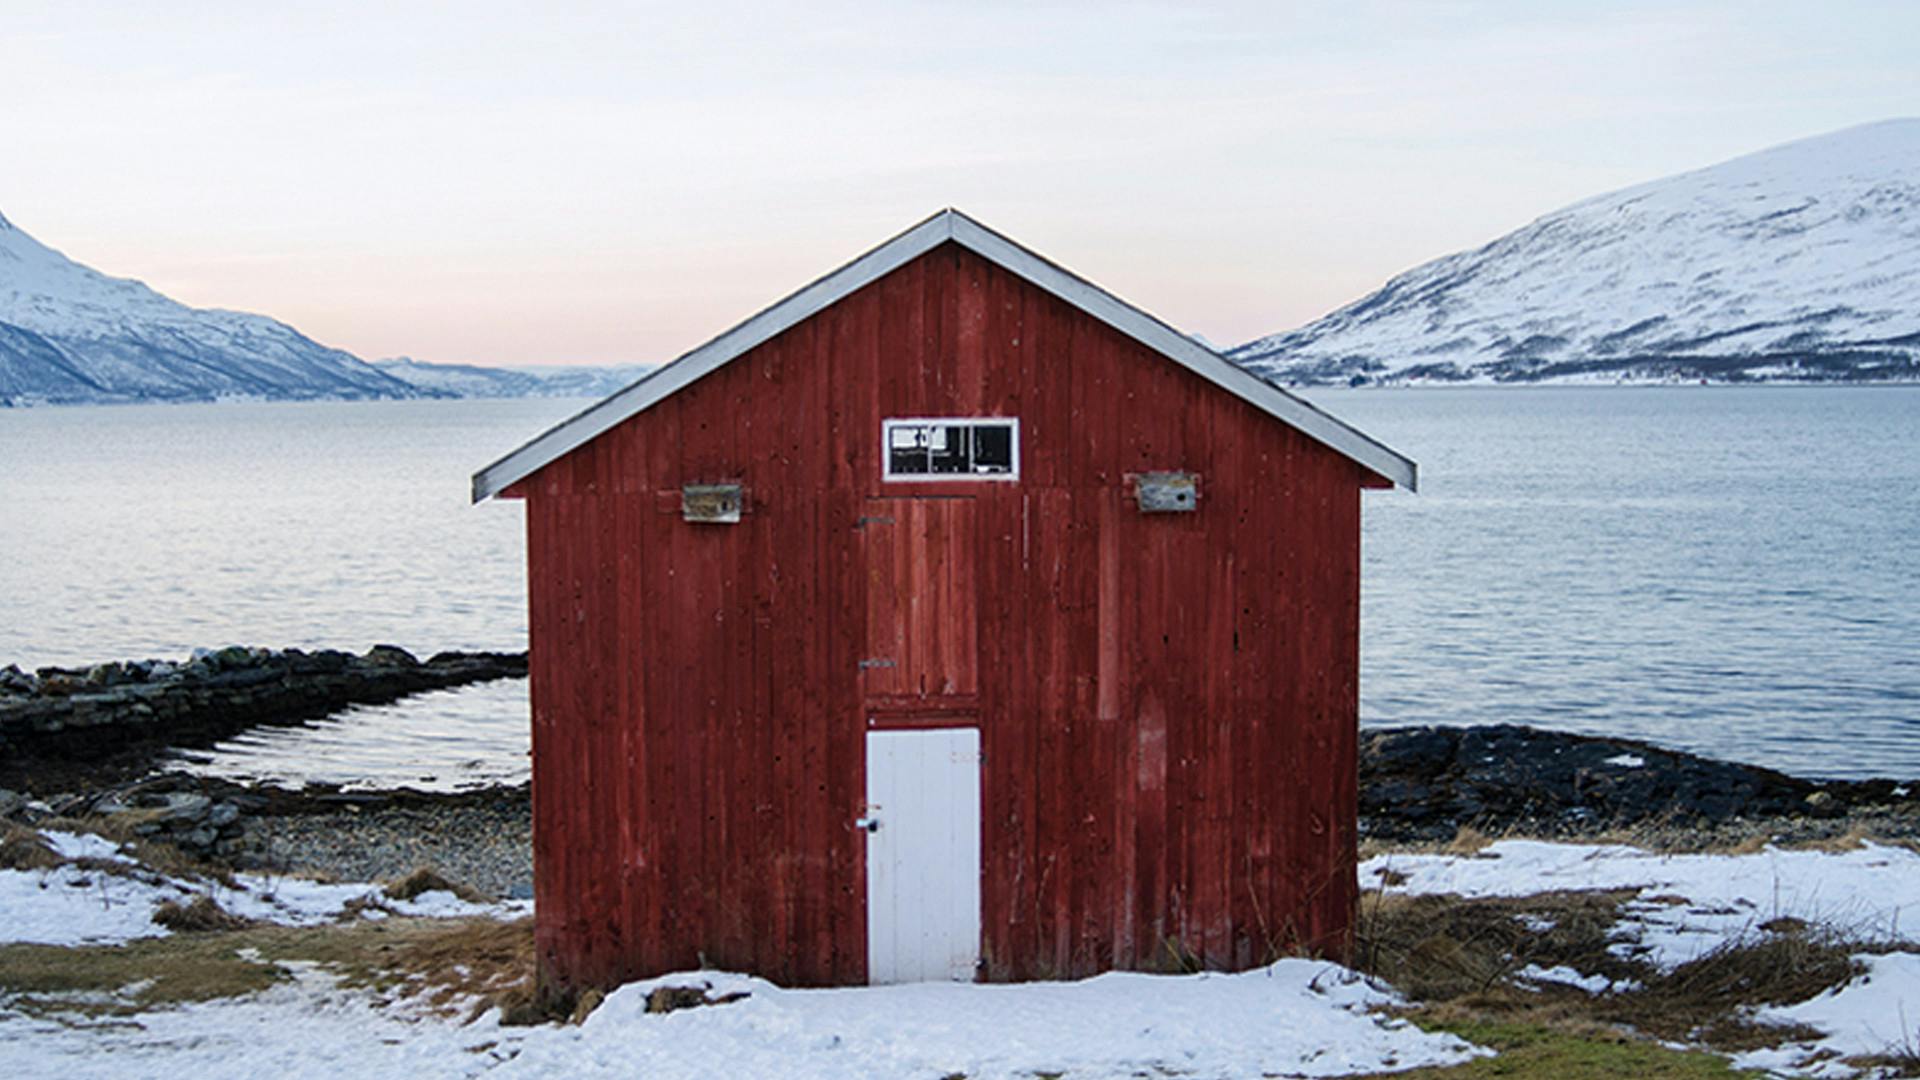 Arctic_landscapes_Wandering_Owl_red_barn.jpg